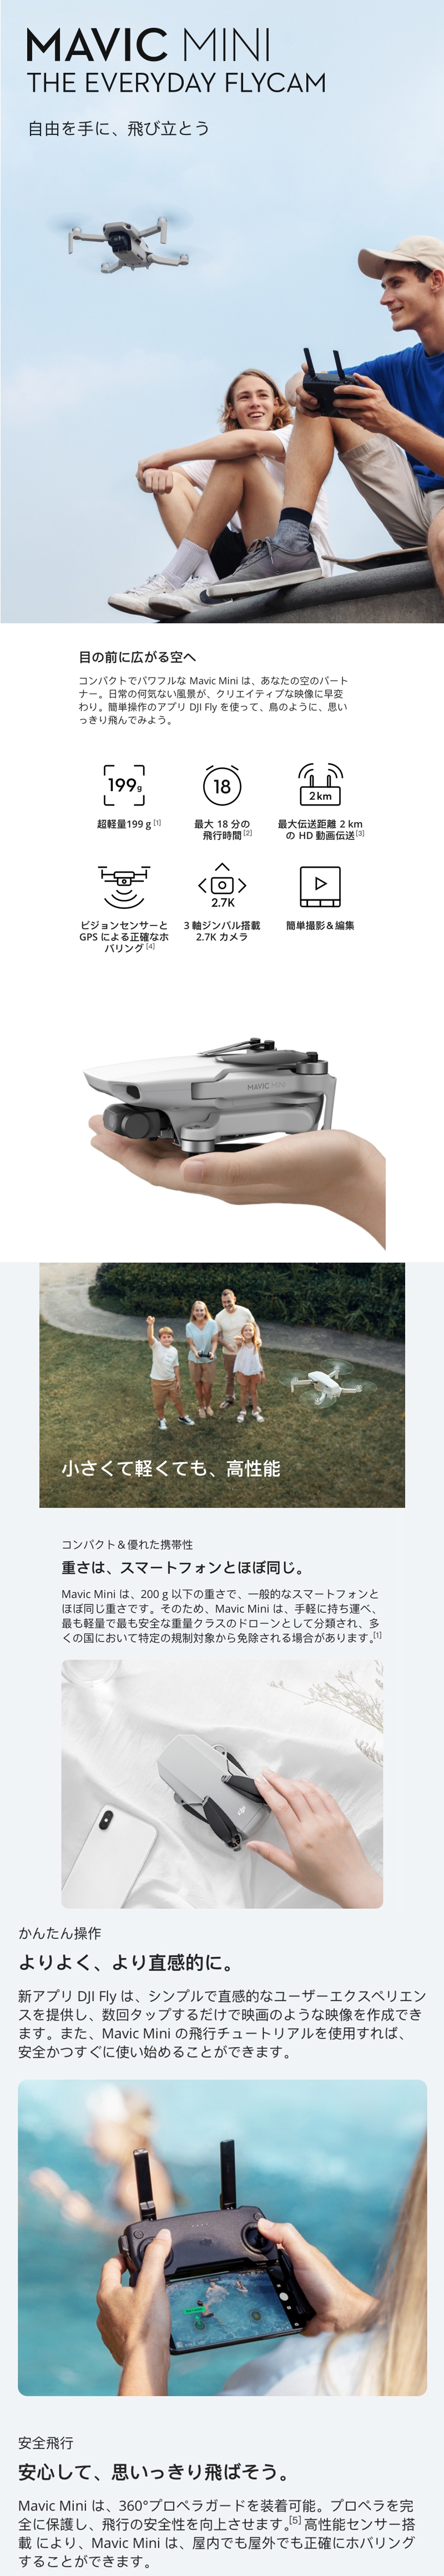 DJI Mavic Mini フライモア コンボ (ユーザマニュアル日本語版 1.0付 